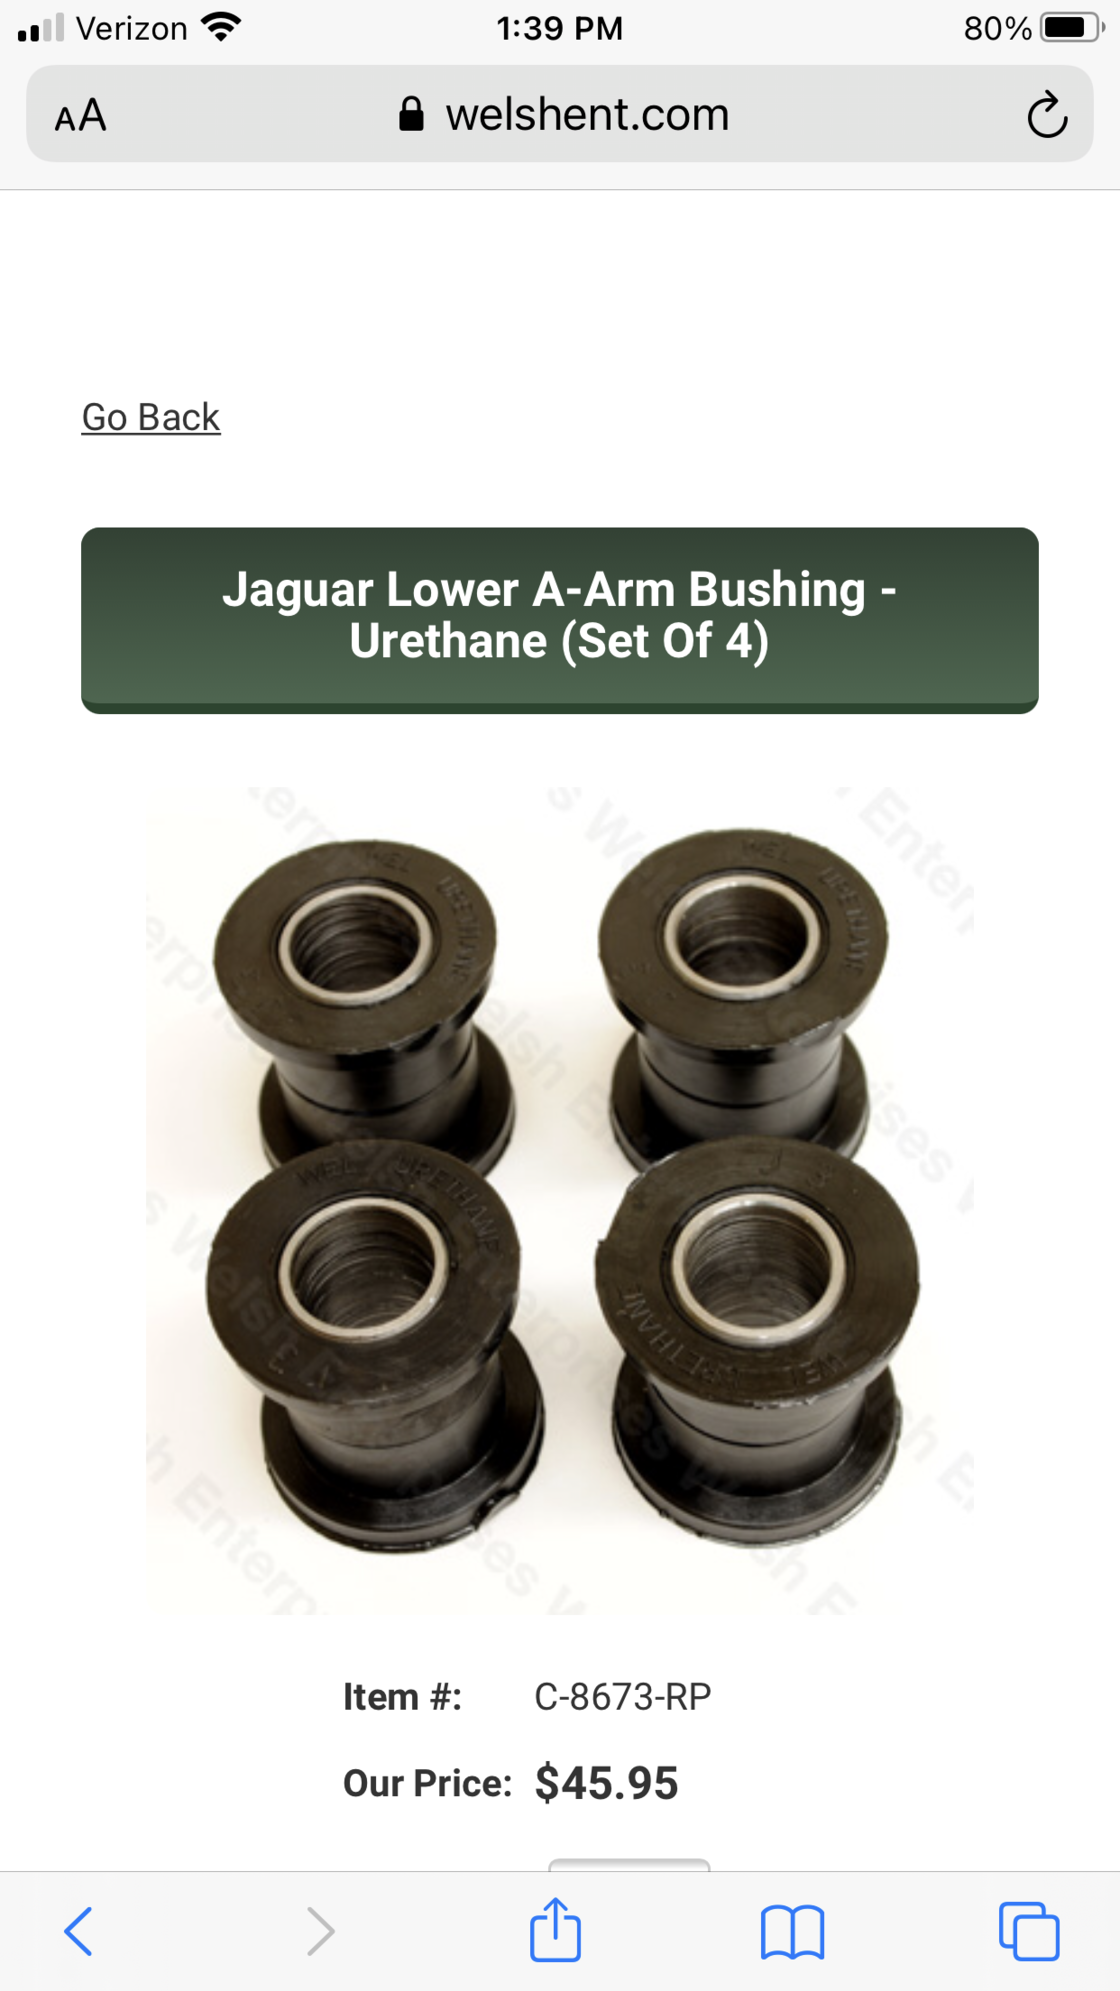 Steering/Suspension - Jaguar Ball joints and bushings - Welsch Jaguar - New - 1984 to 1987 Jaguar XJ6 - Canonsburg, PA 15317, United States